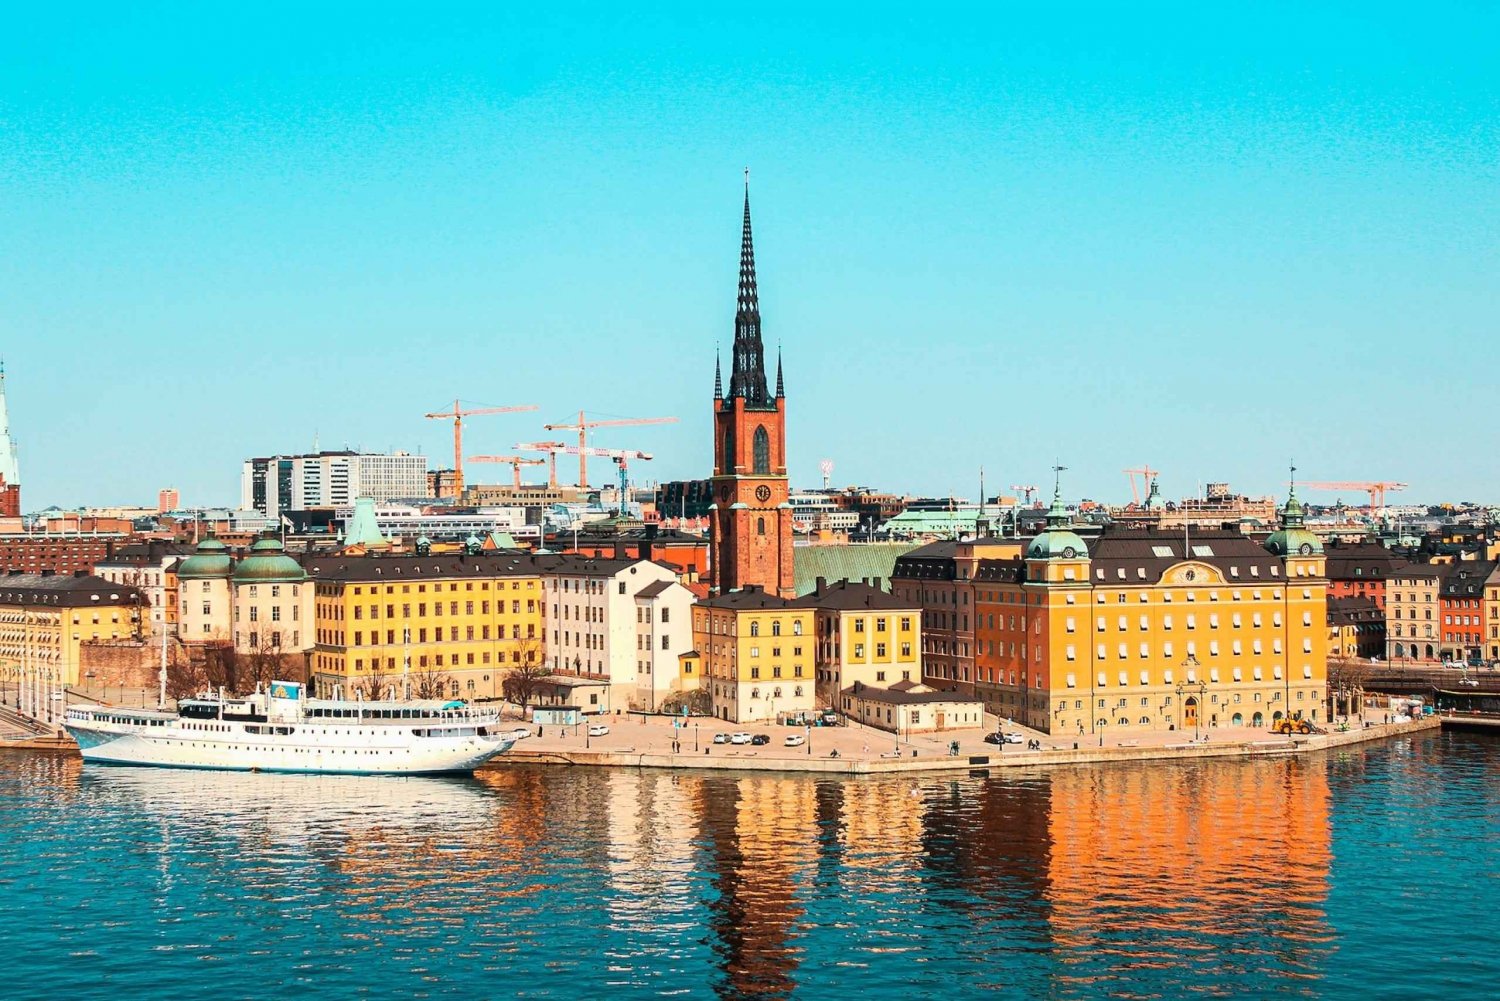 Fototour: historische dagtour door de Stockholm-eilanden